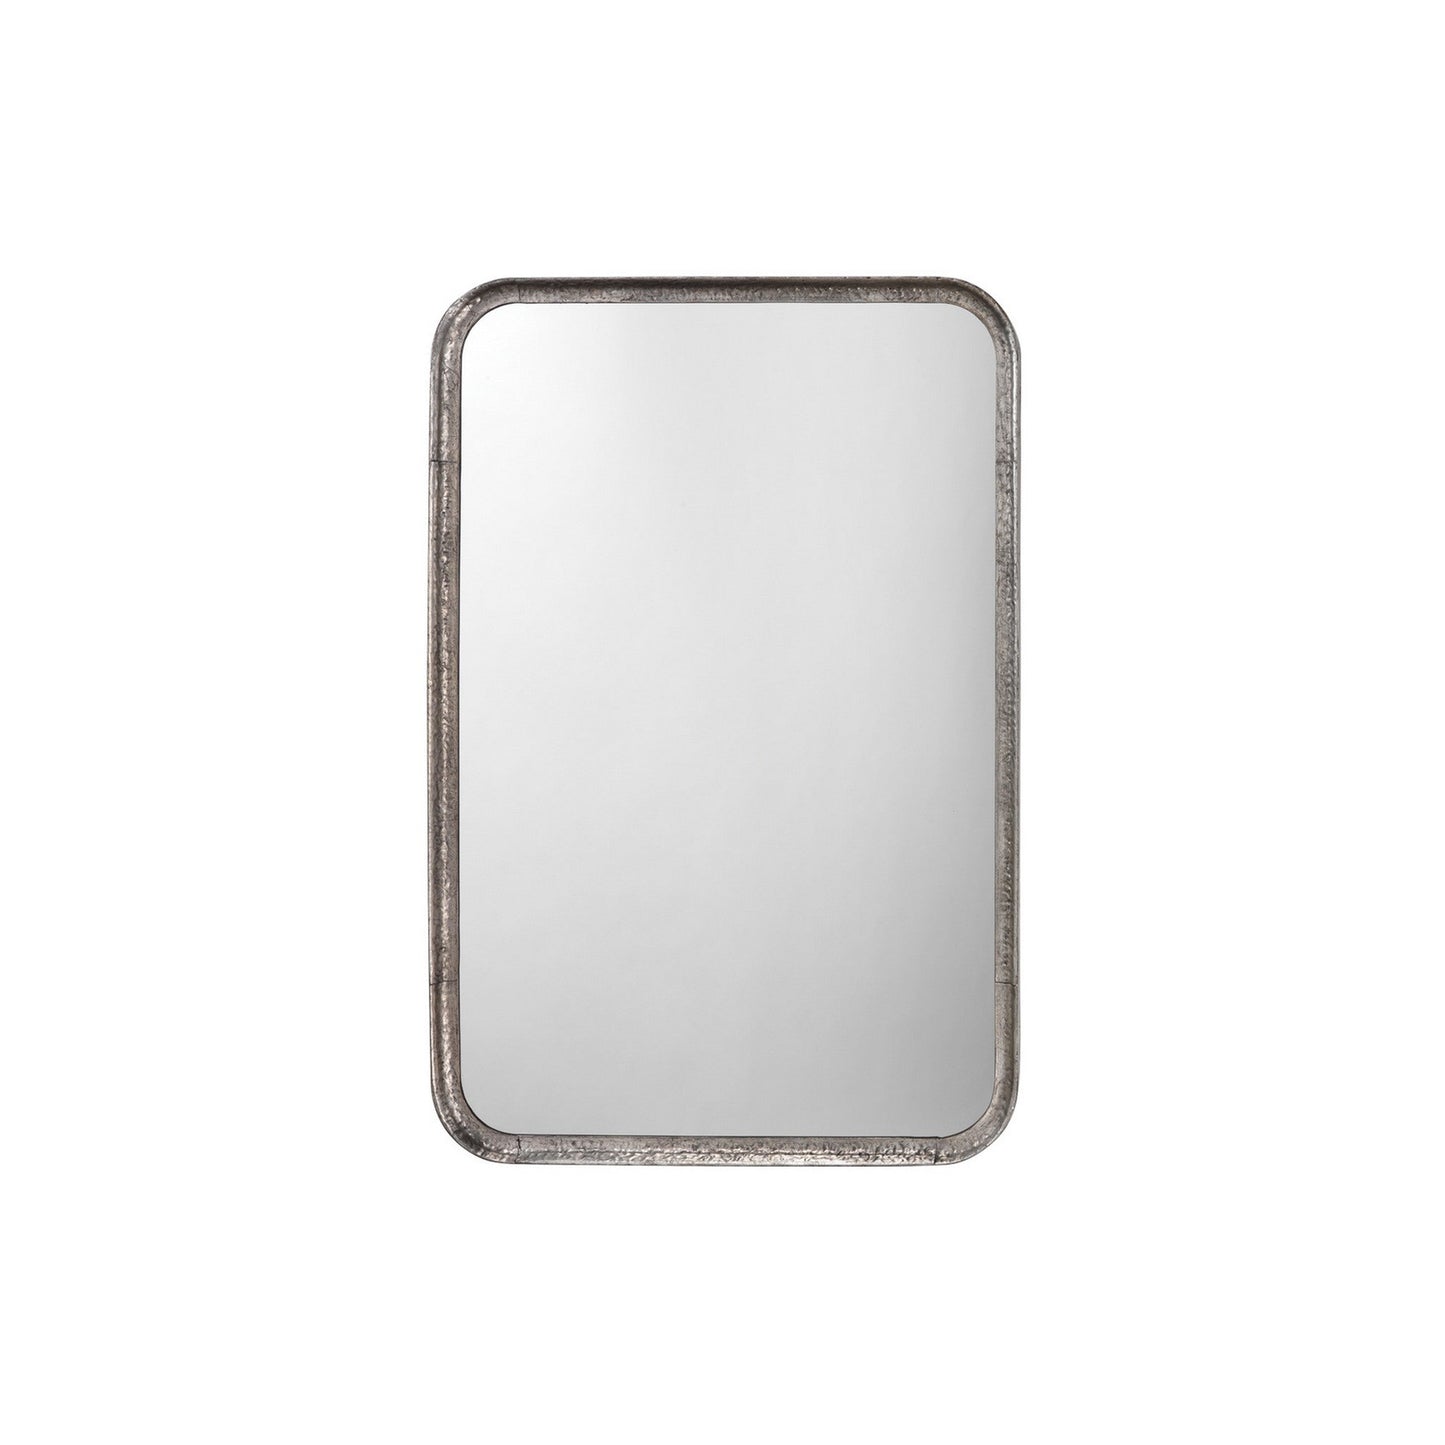 Jamie Young Principle 24" x 36" Rectangular Vanity Mirror With Silver Leaf Metal Frame